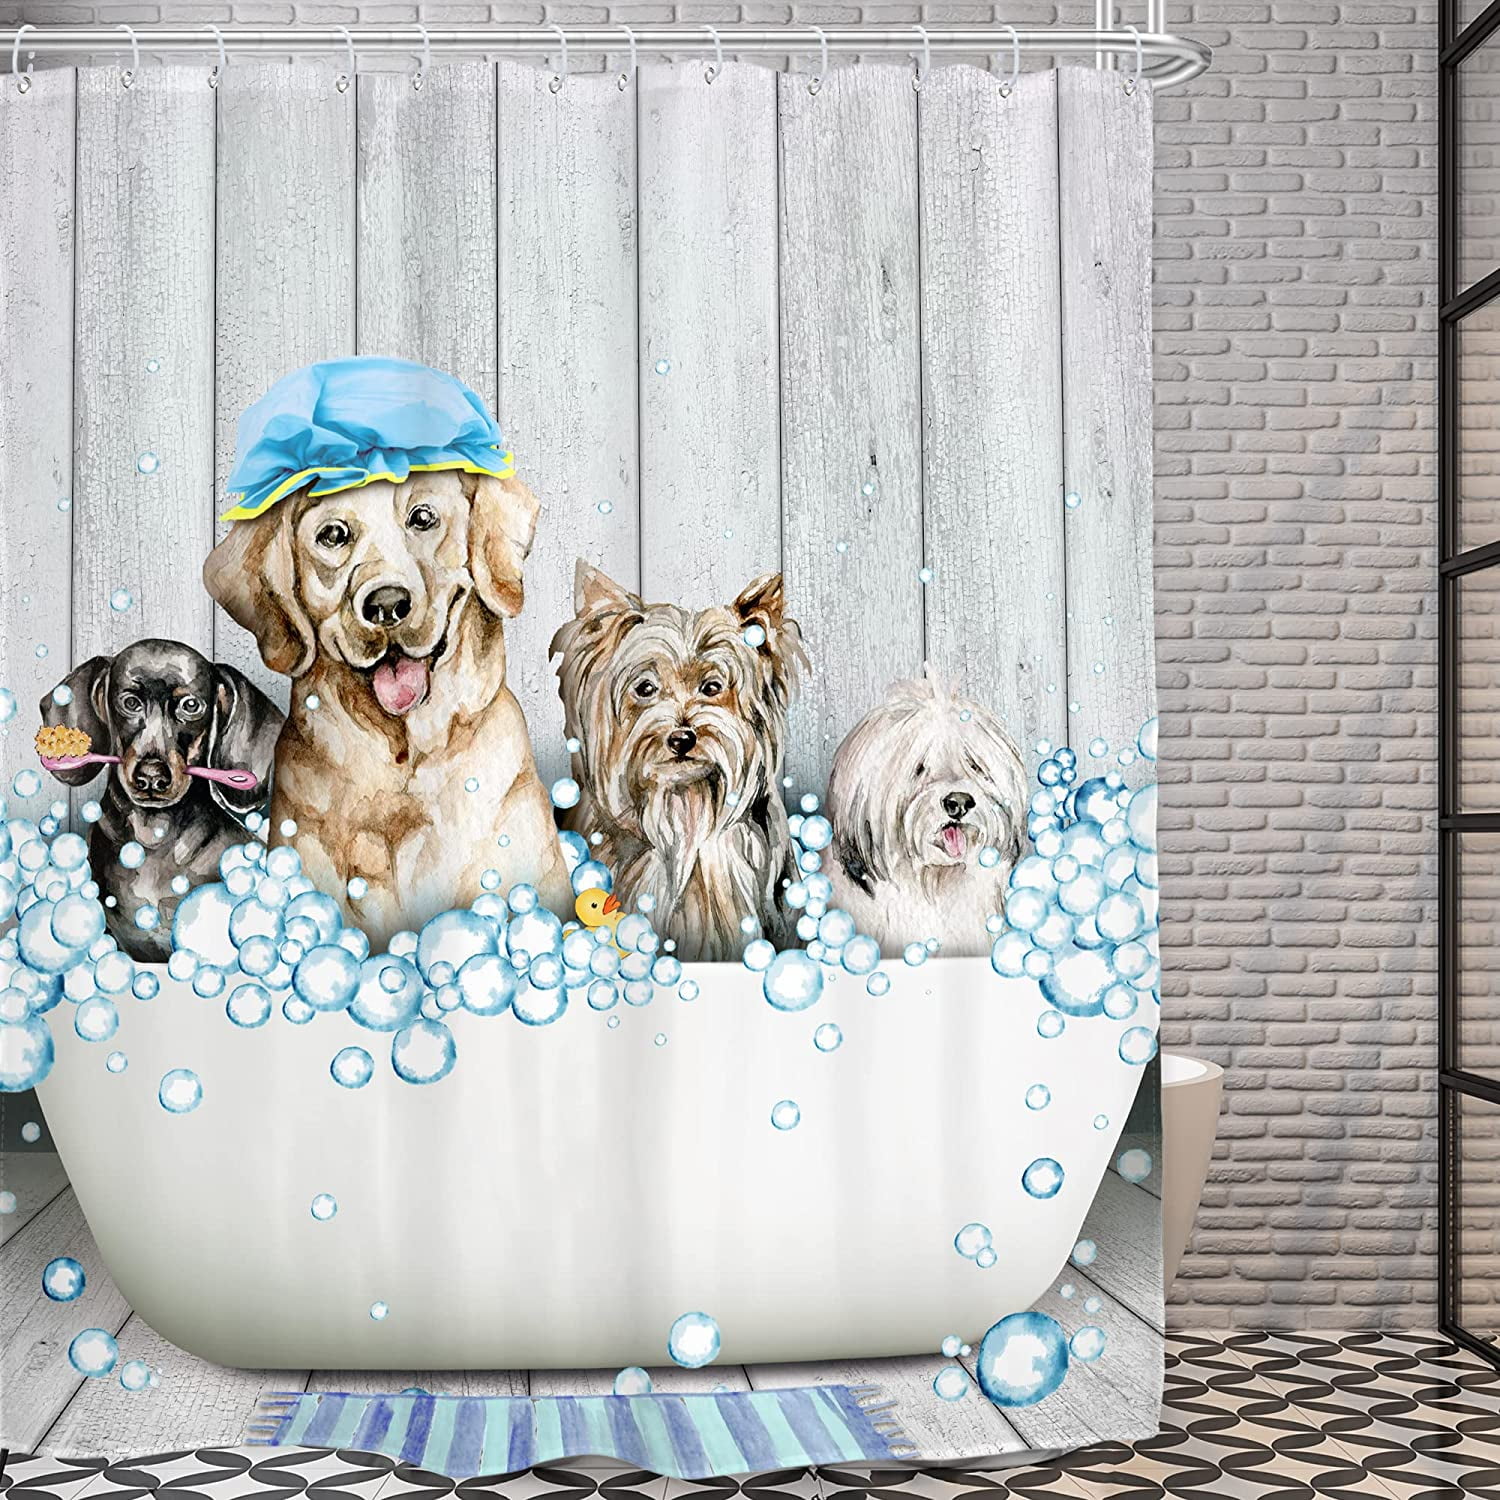  Teamery Shower Curtain Set, Cute Dog Shower Curtain